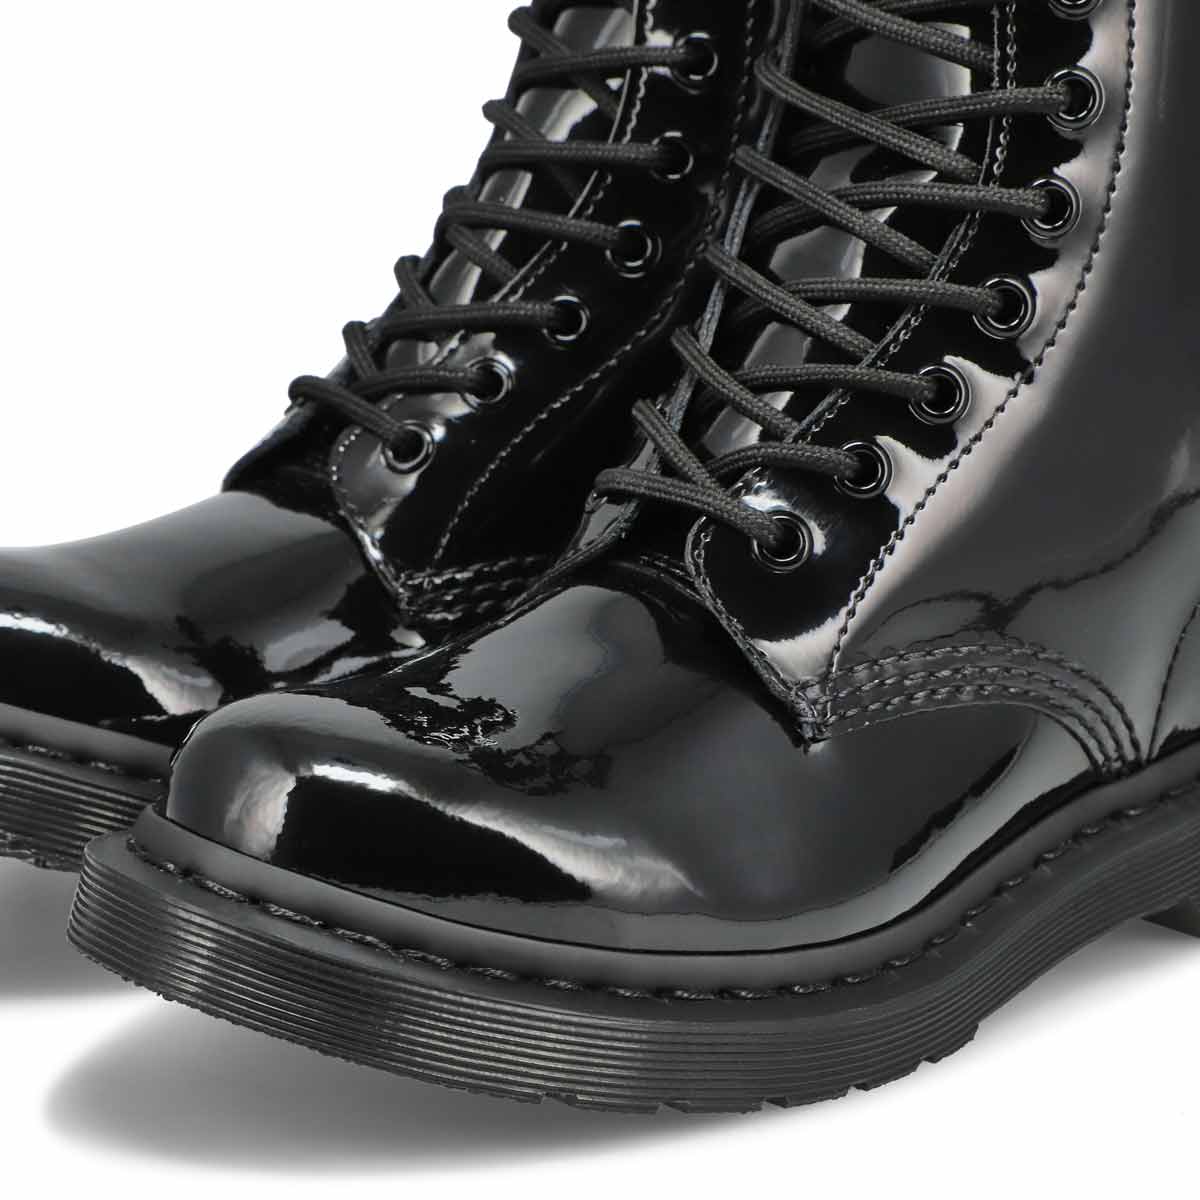 Women's 1460 8 Eye Smooth Boot - Black Patent